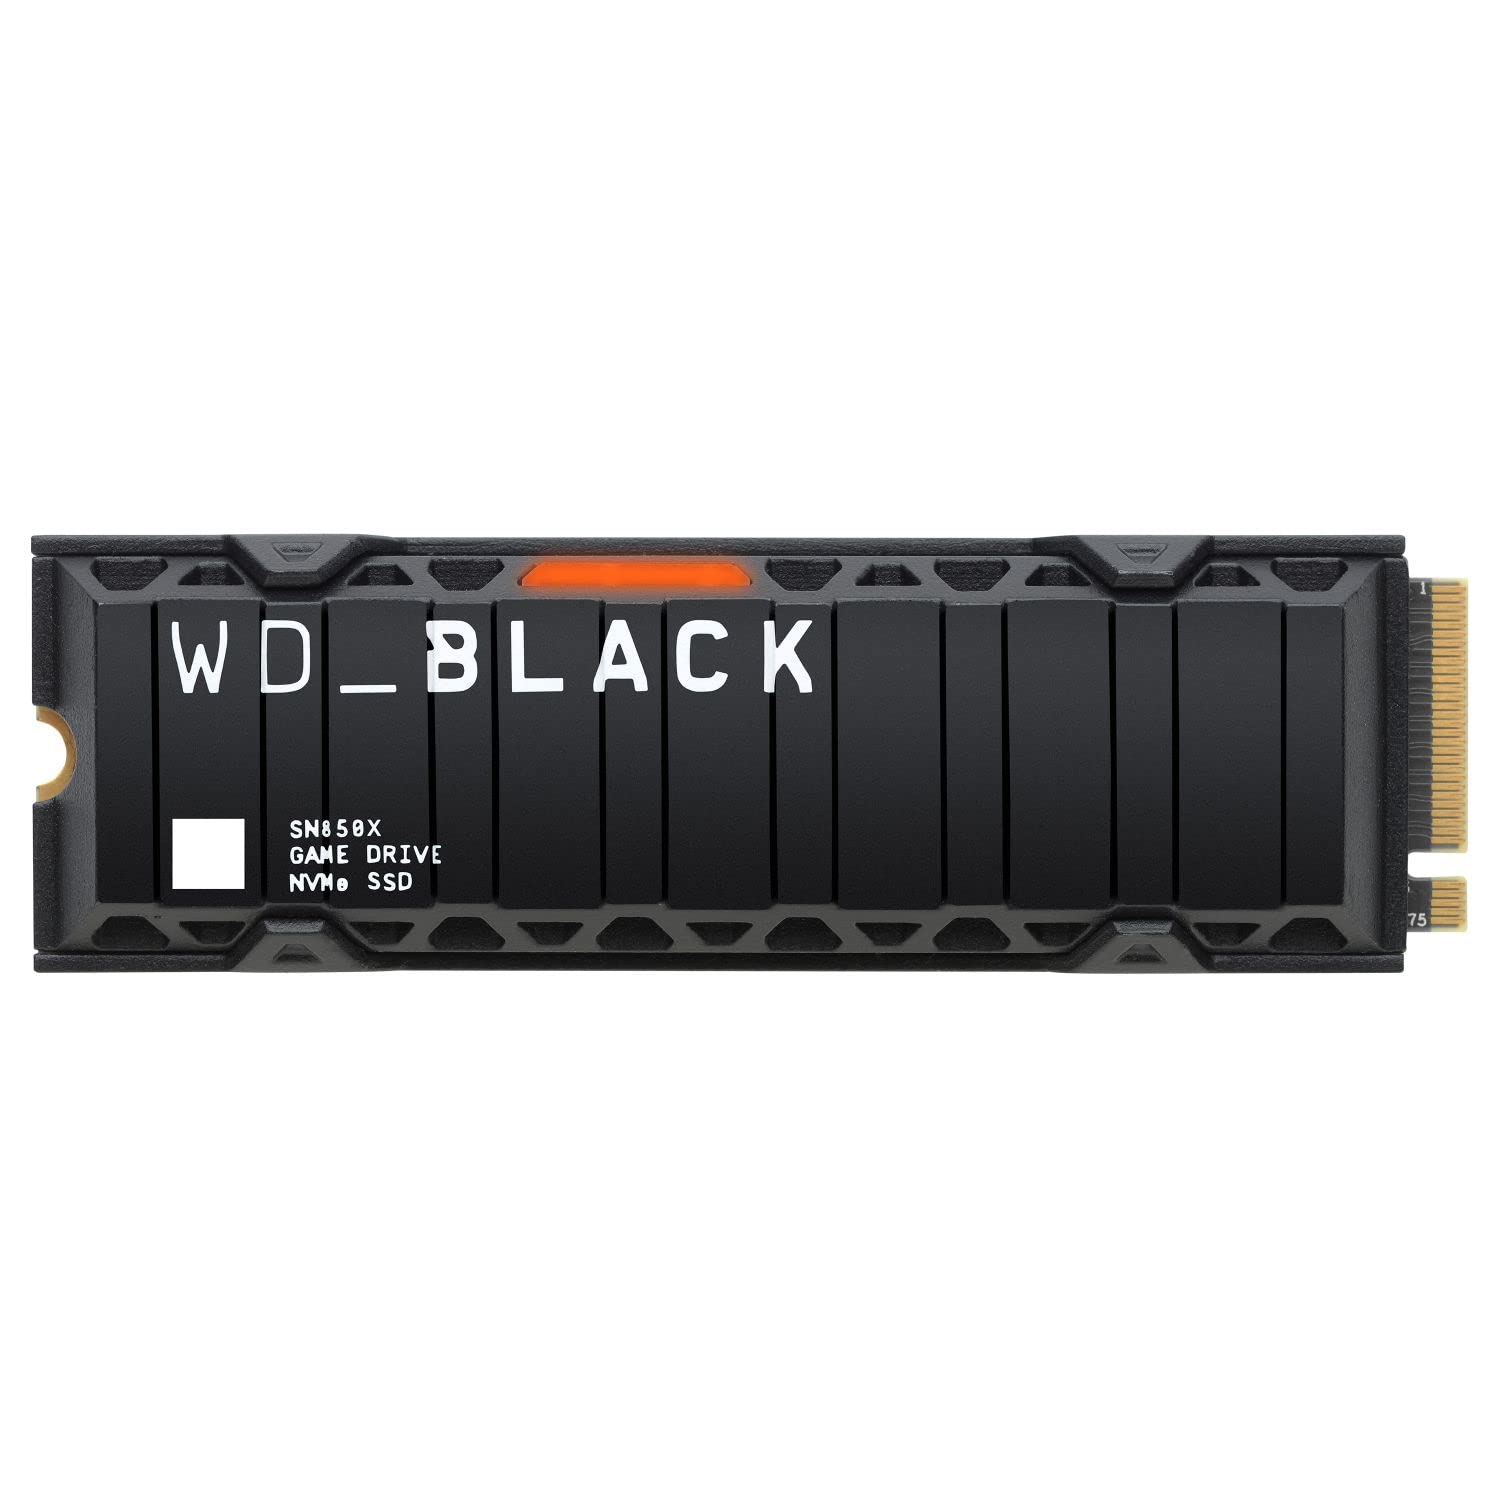 WD_BLACK 2TB SN850X NVMe Internal Gaming SSD Solid State Drive w/ Heatsink $120